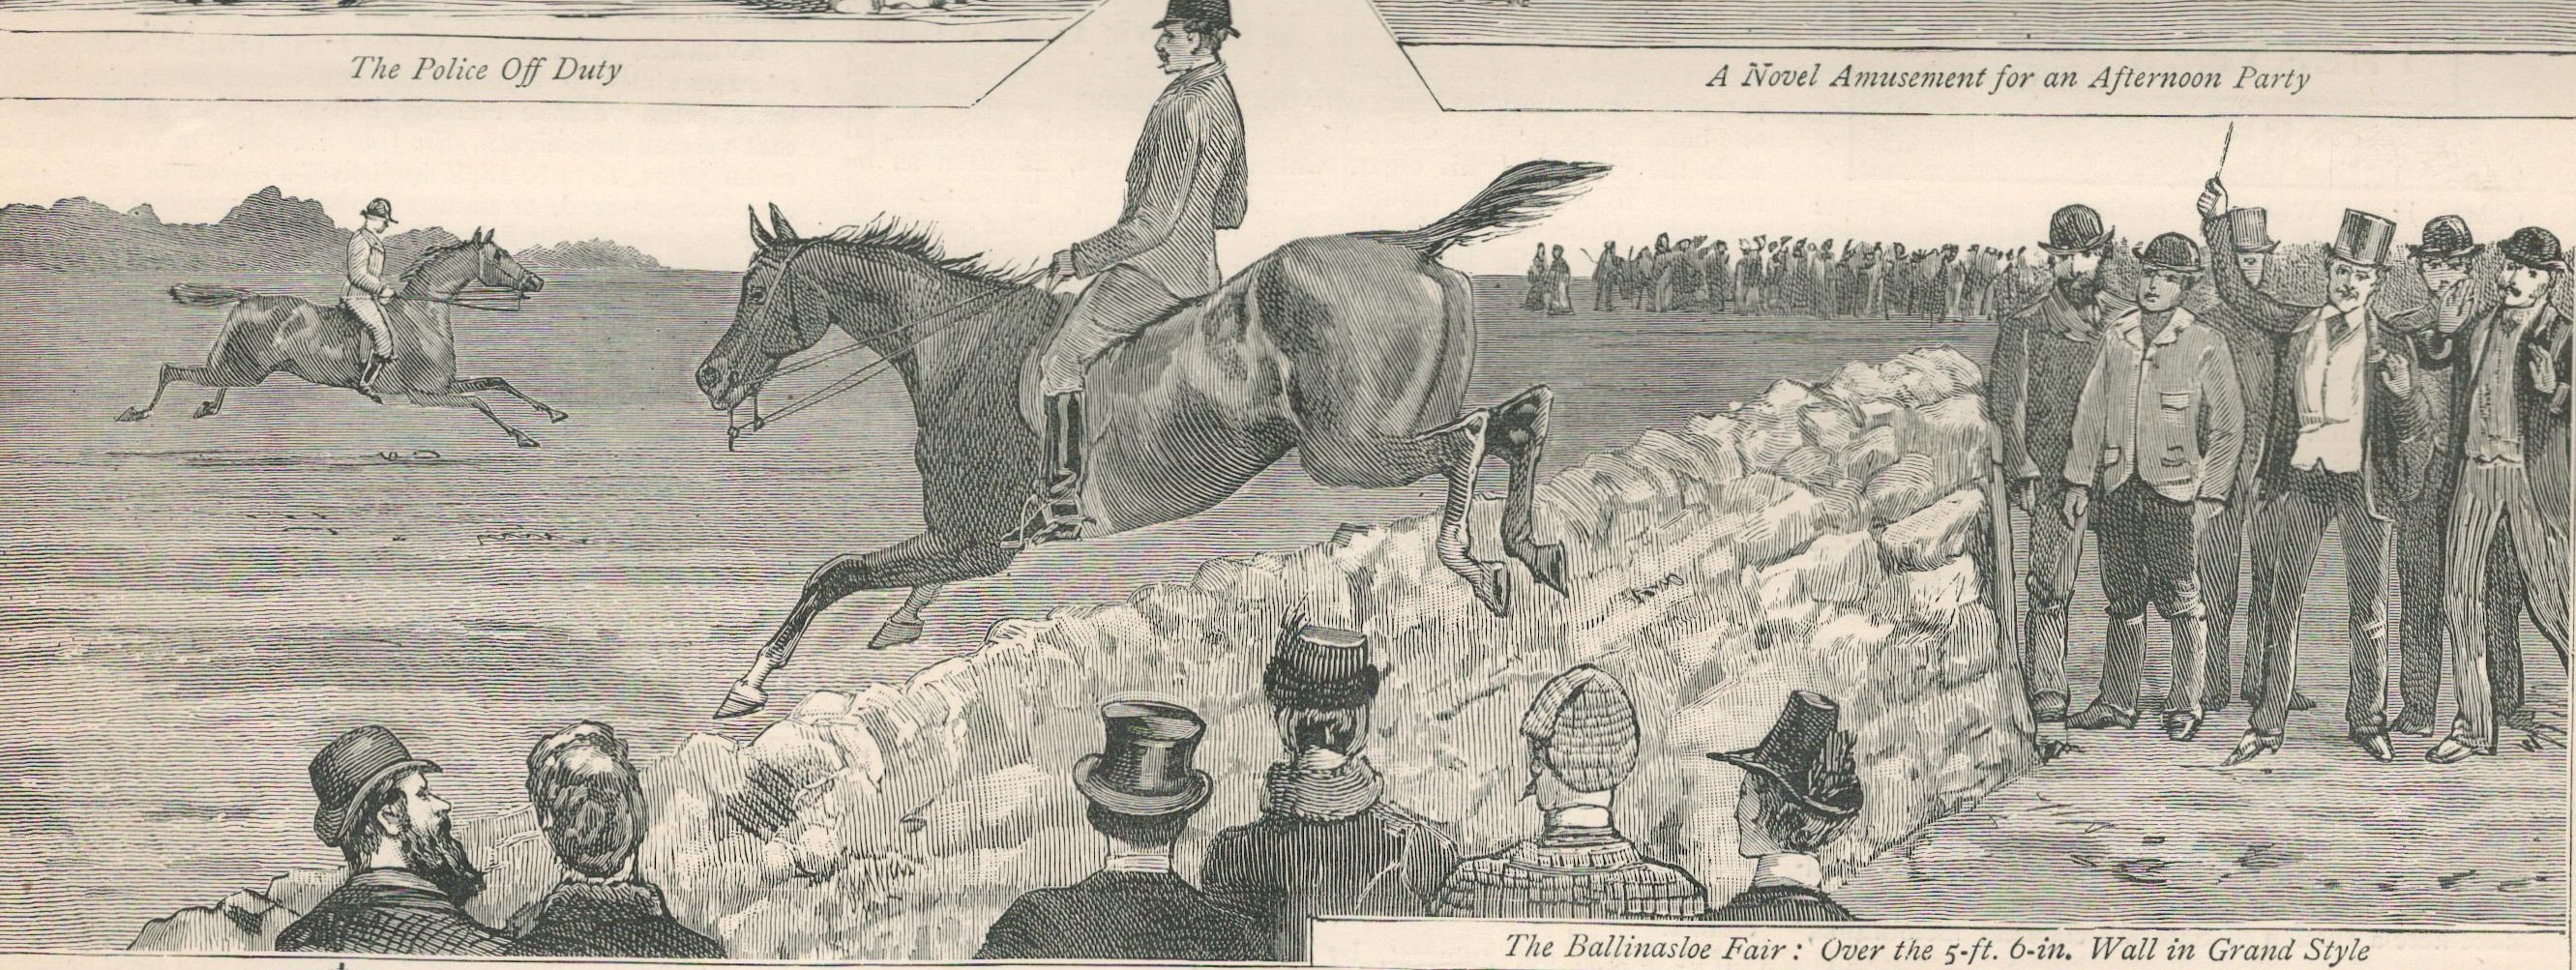 Pilgrimage to St Kevins Well Galway, Ballinasloe Fair 1887 Newspaper - Image 4 of 6